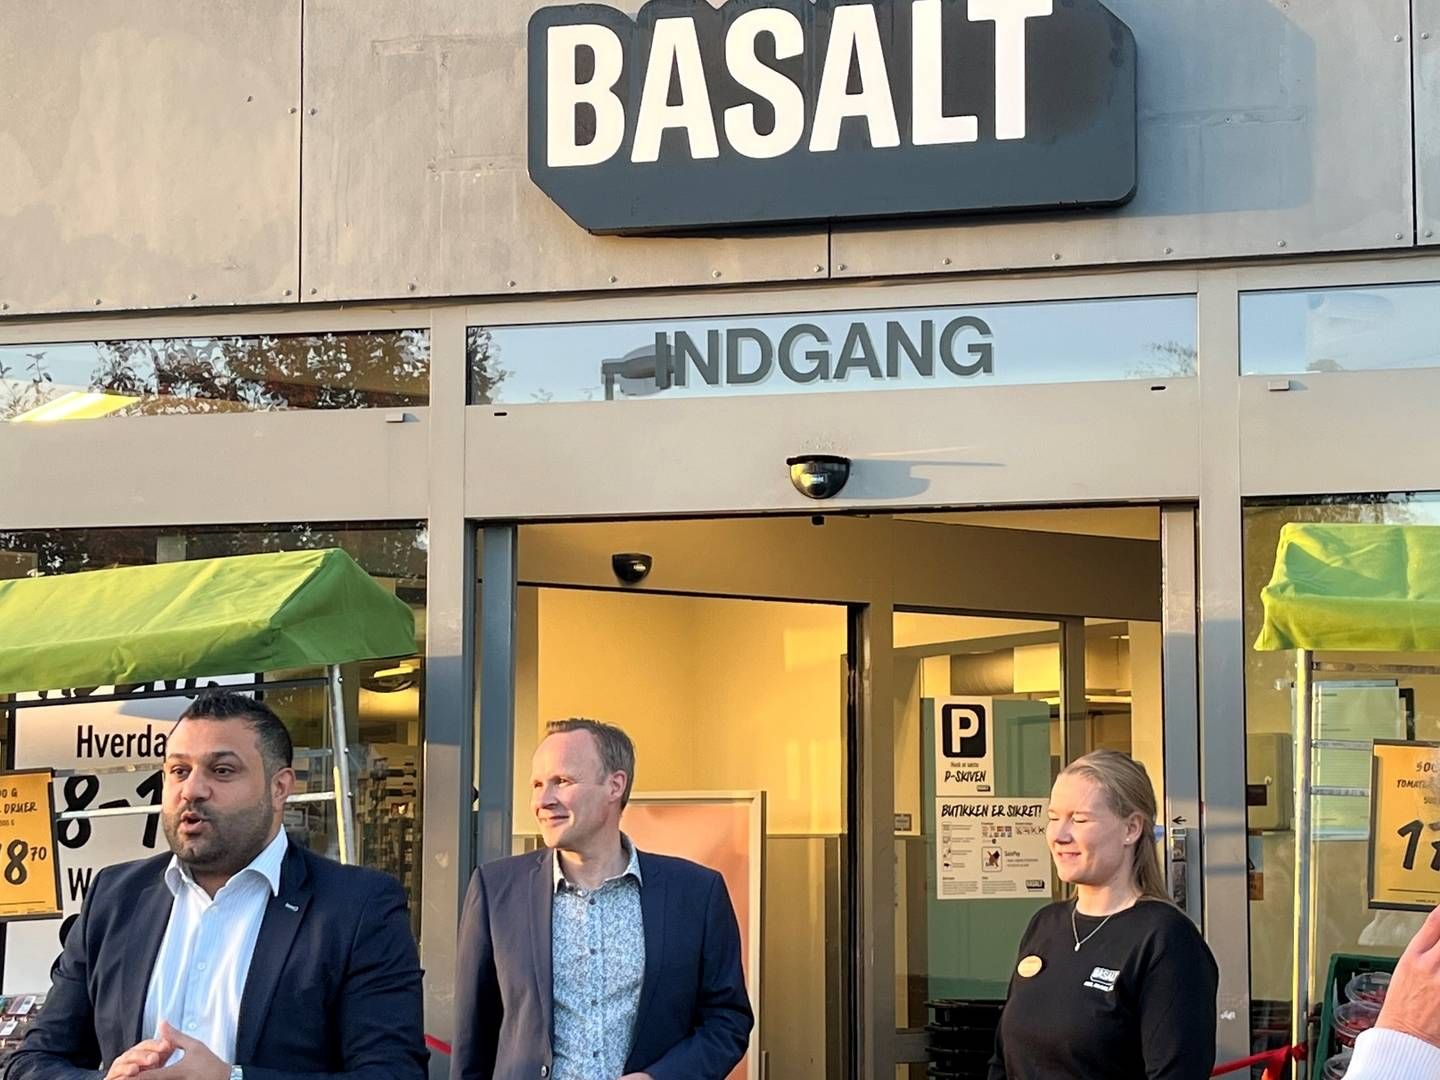 Braw Bakir, som er landedirektør for Basalt og Netto kæderne, åbner den første Basalt forretning. | Foto: Stine Skriver